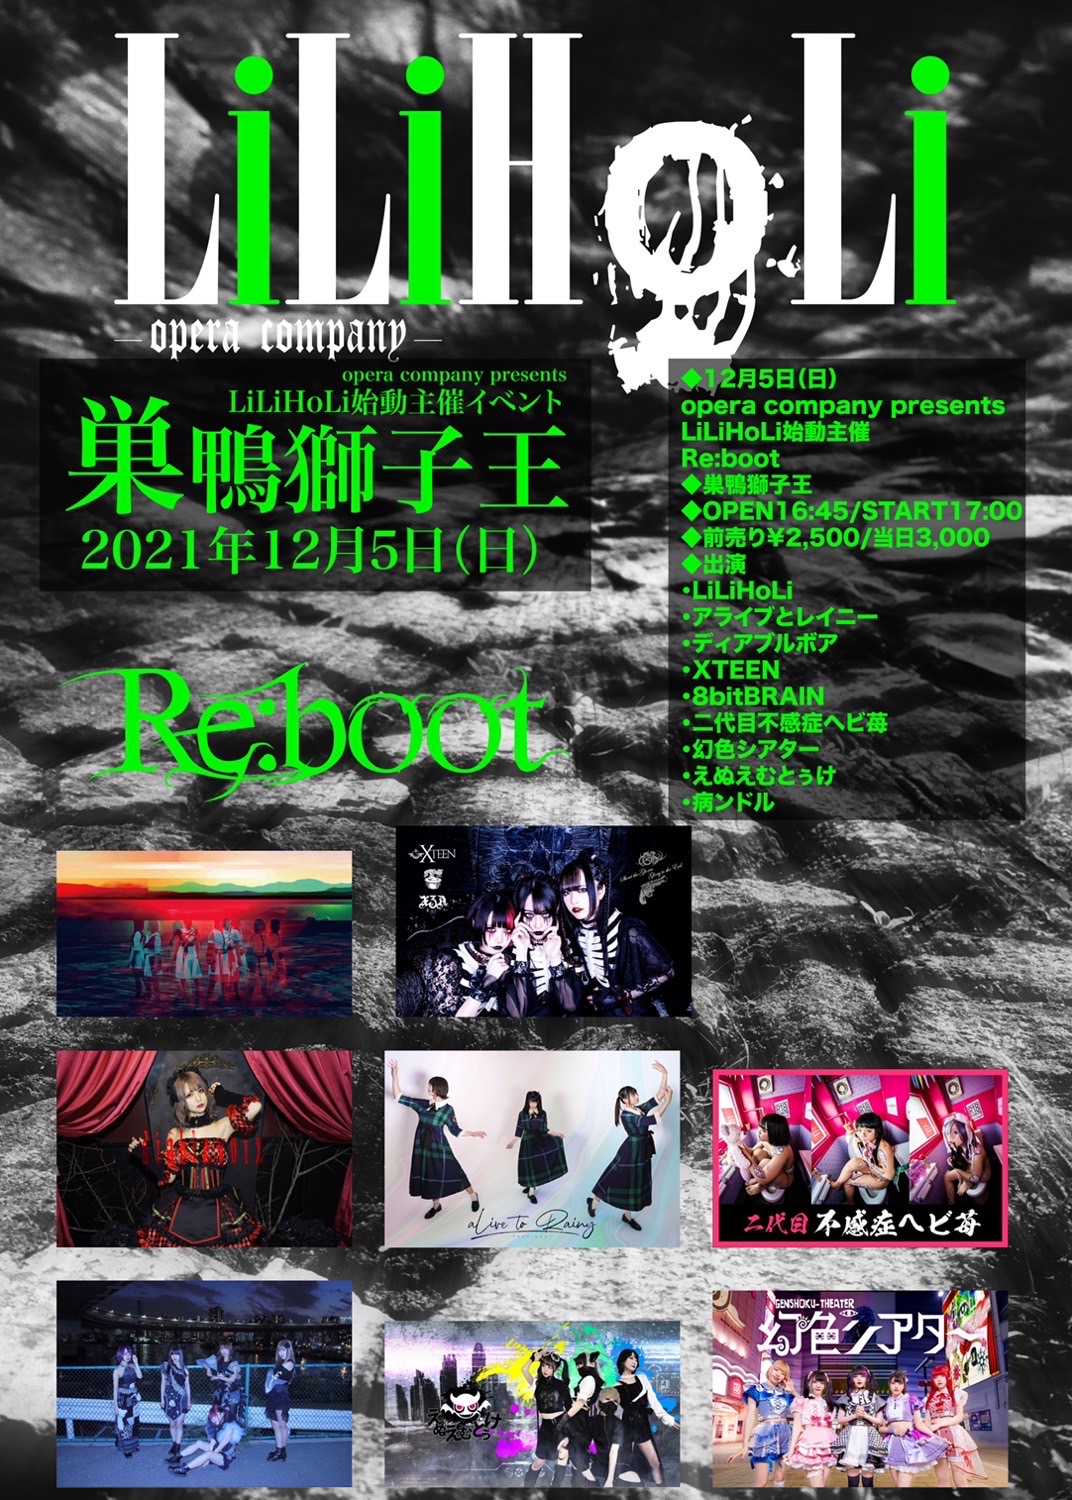 opera company presents LiLiHoLi始動主催 〜Re:boot〜 メインイメージ